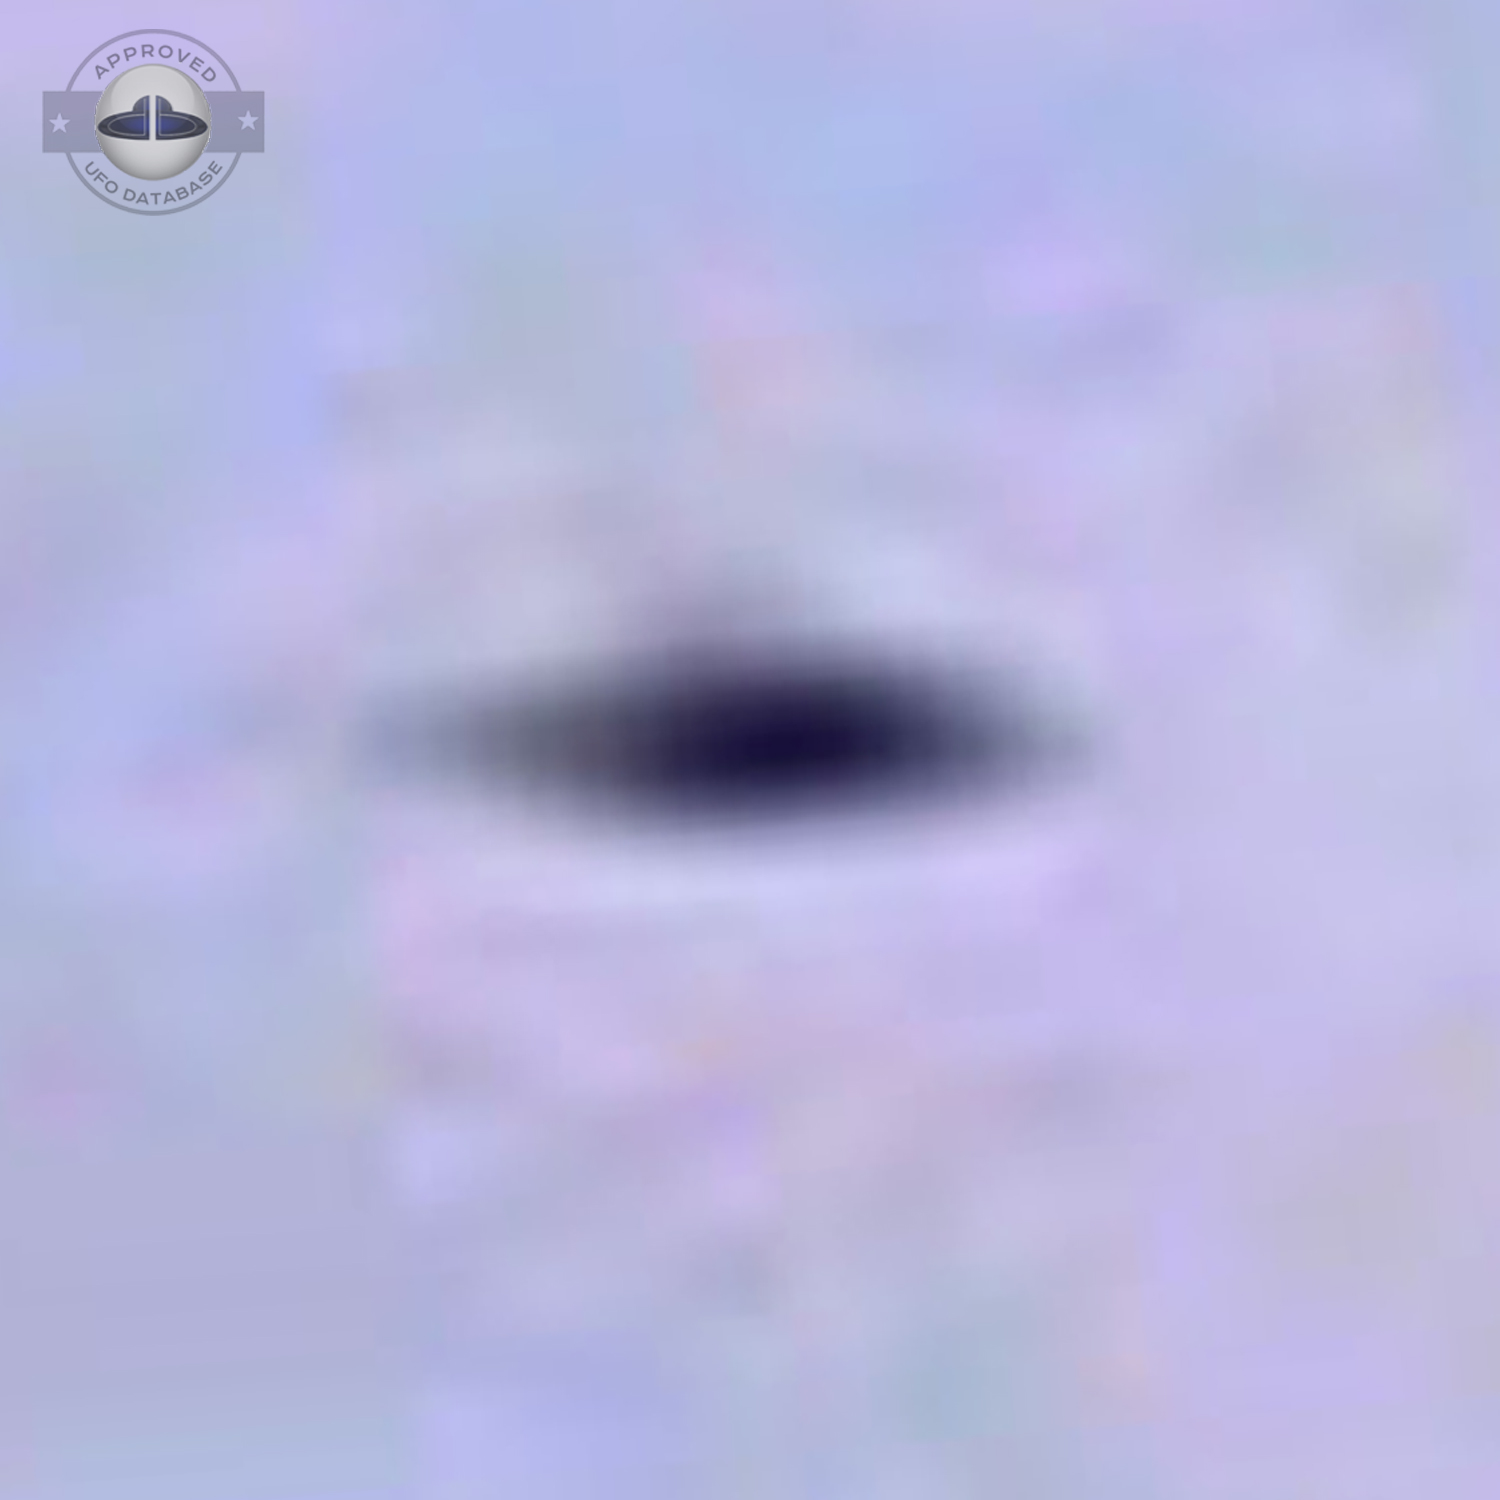 UFO over electric line in grey sky - UFO picture taken in Valcheta UFO Picture #20-4